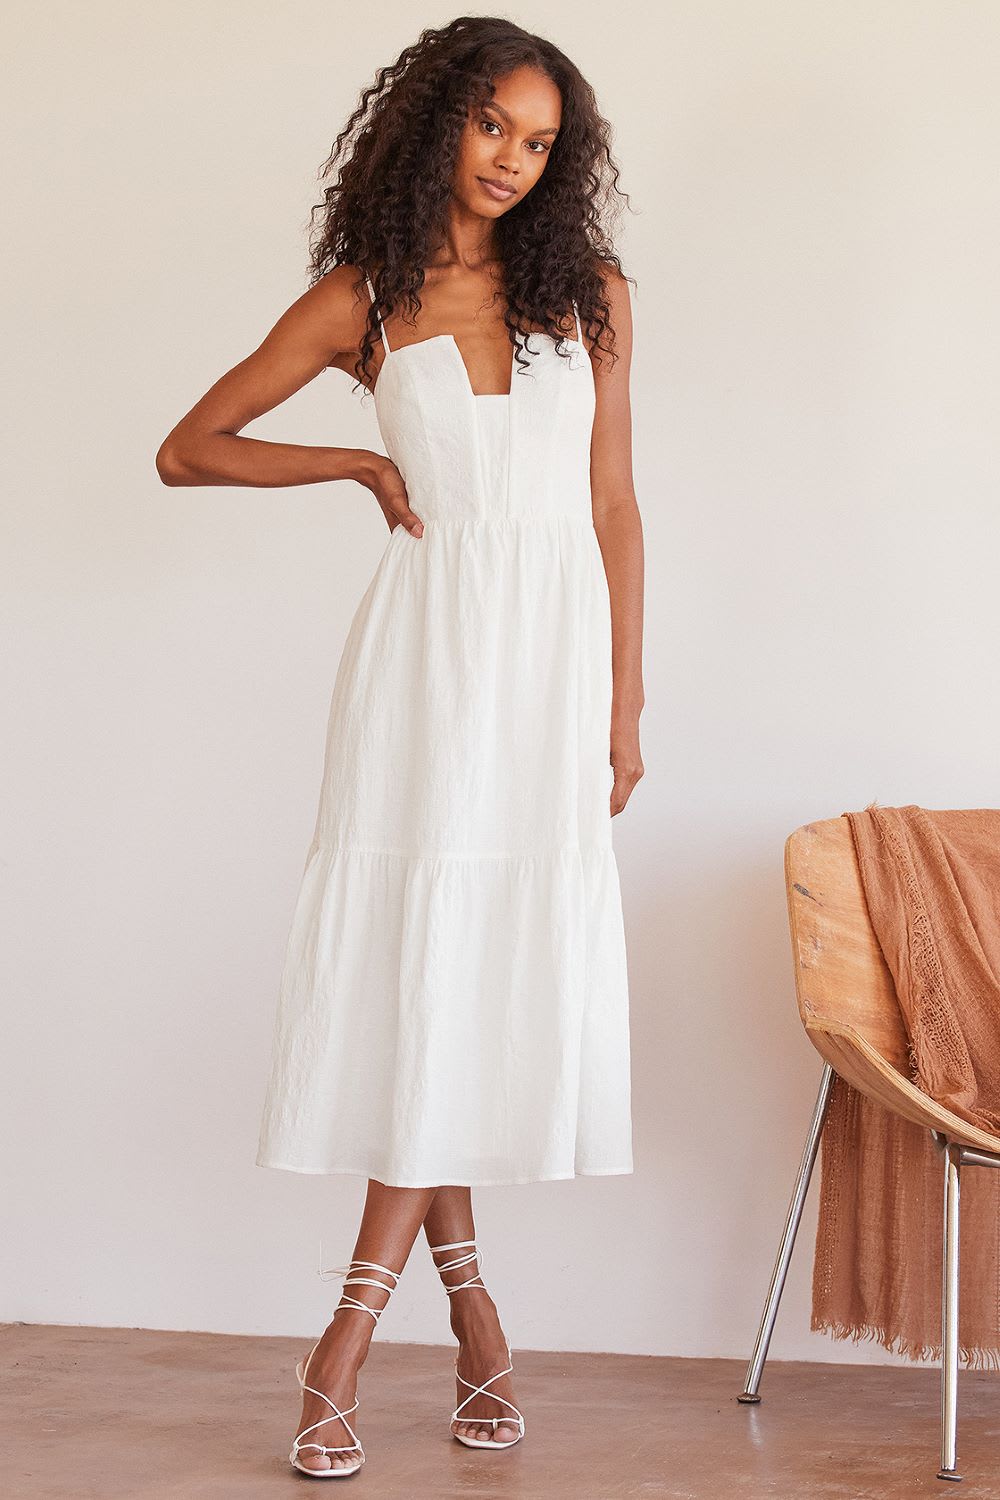 The Best 100% Cotton Dresses of 2023 - Lulus.com Fashion Blog